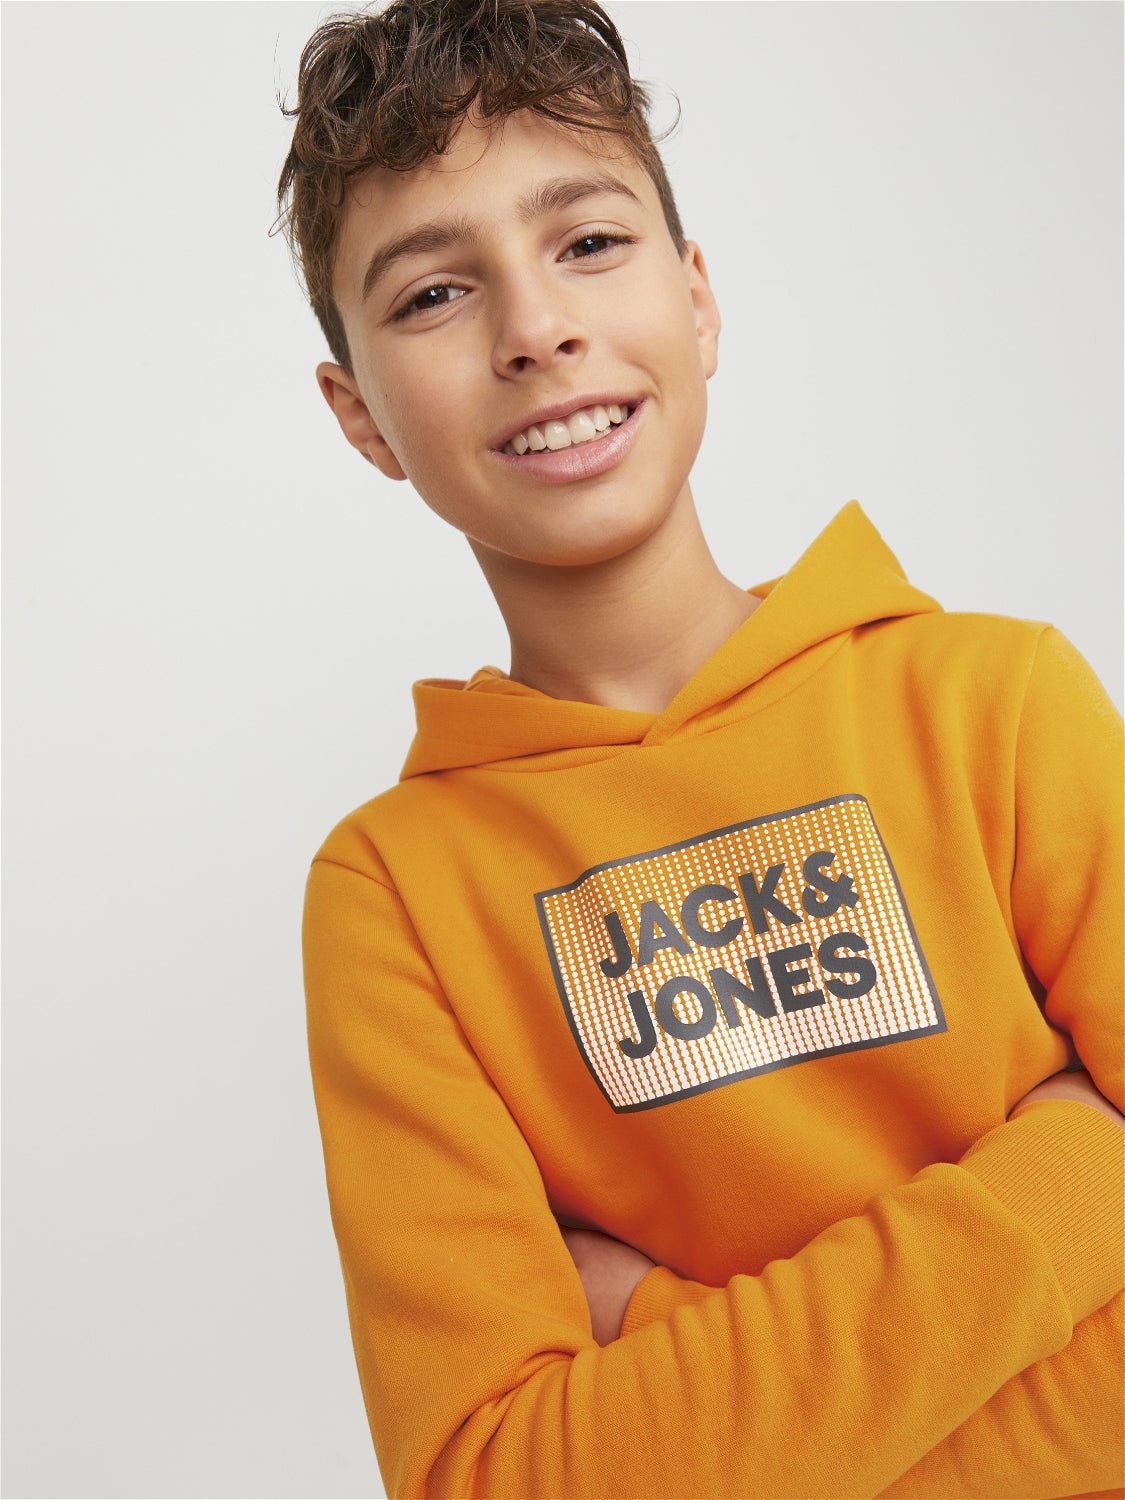 Sudadera Jack&Jones Junior Pal gris capucha para niño